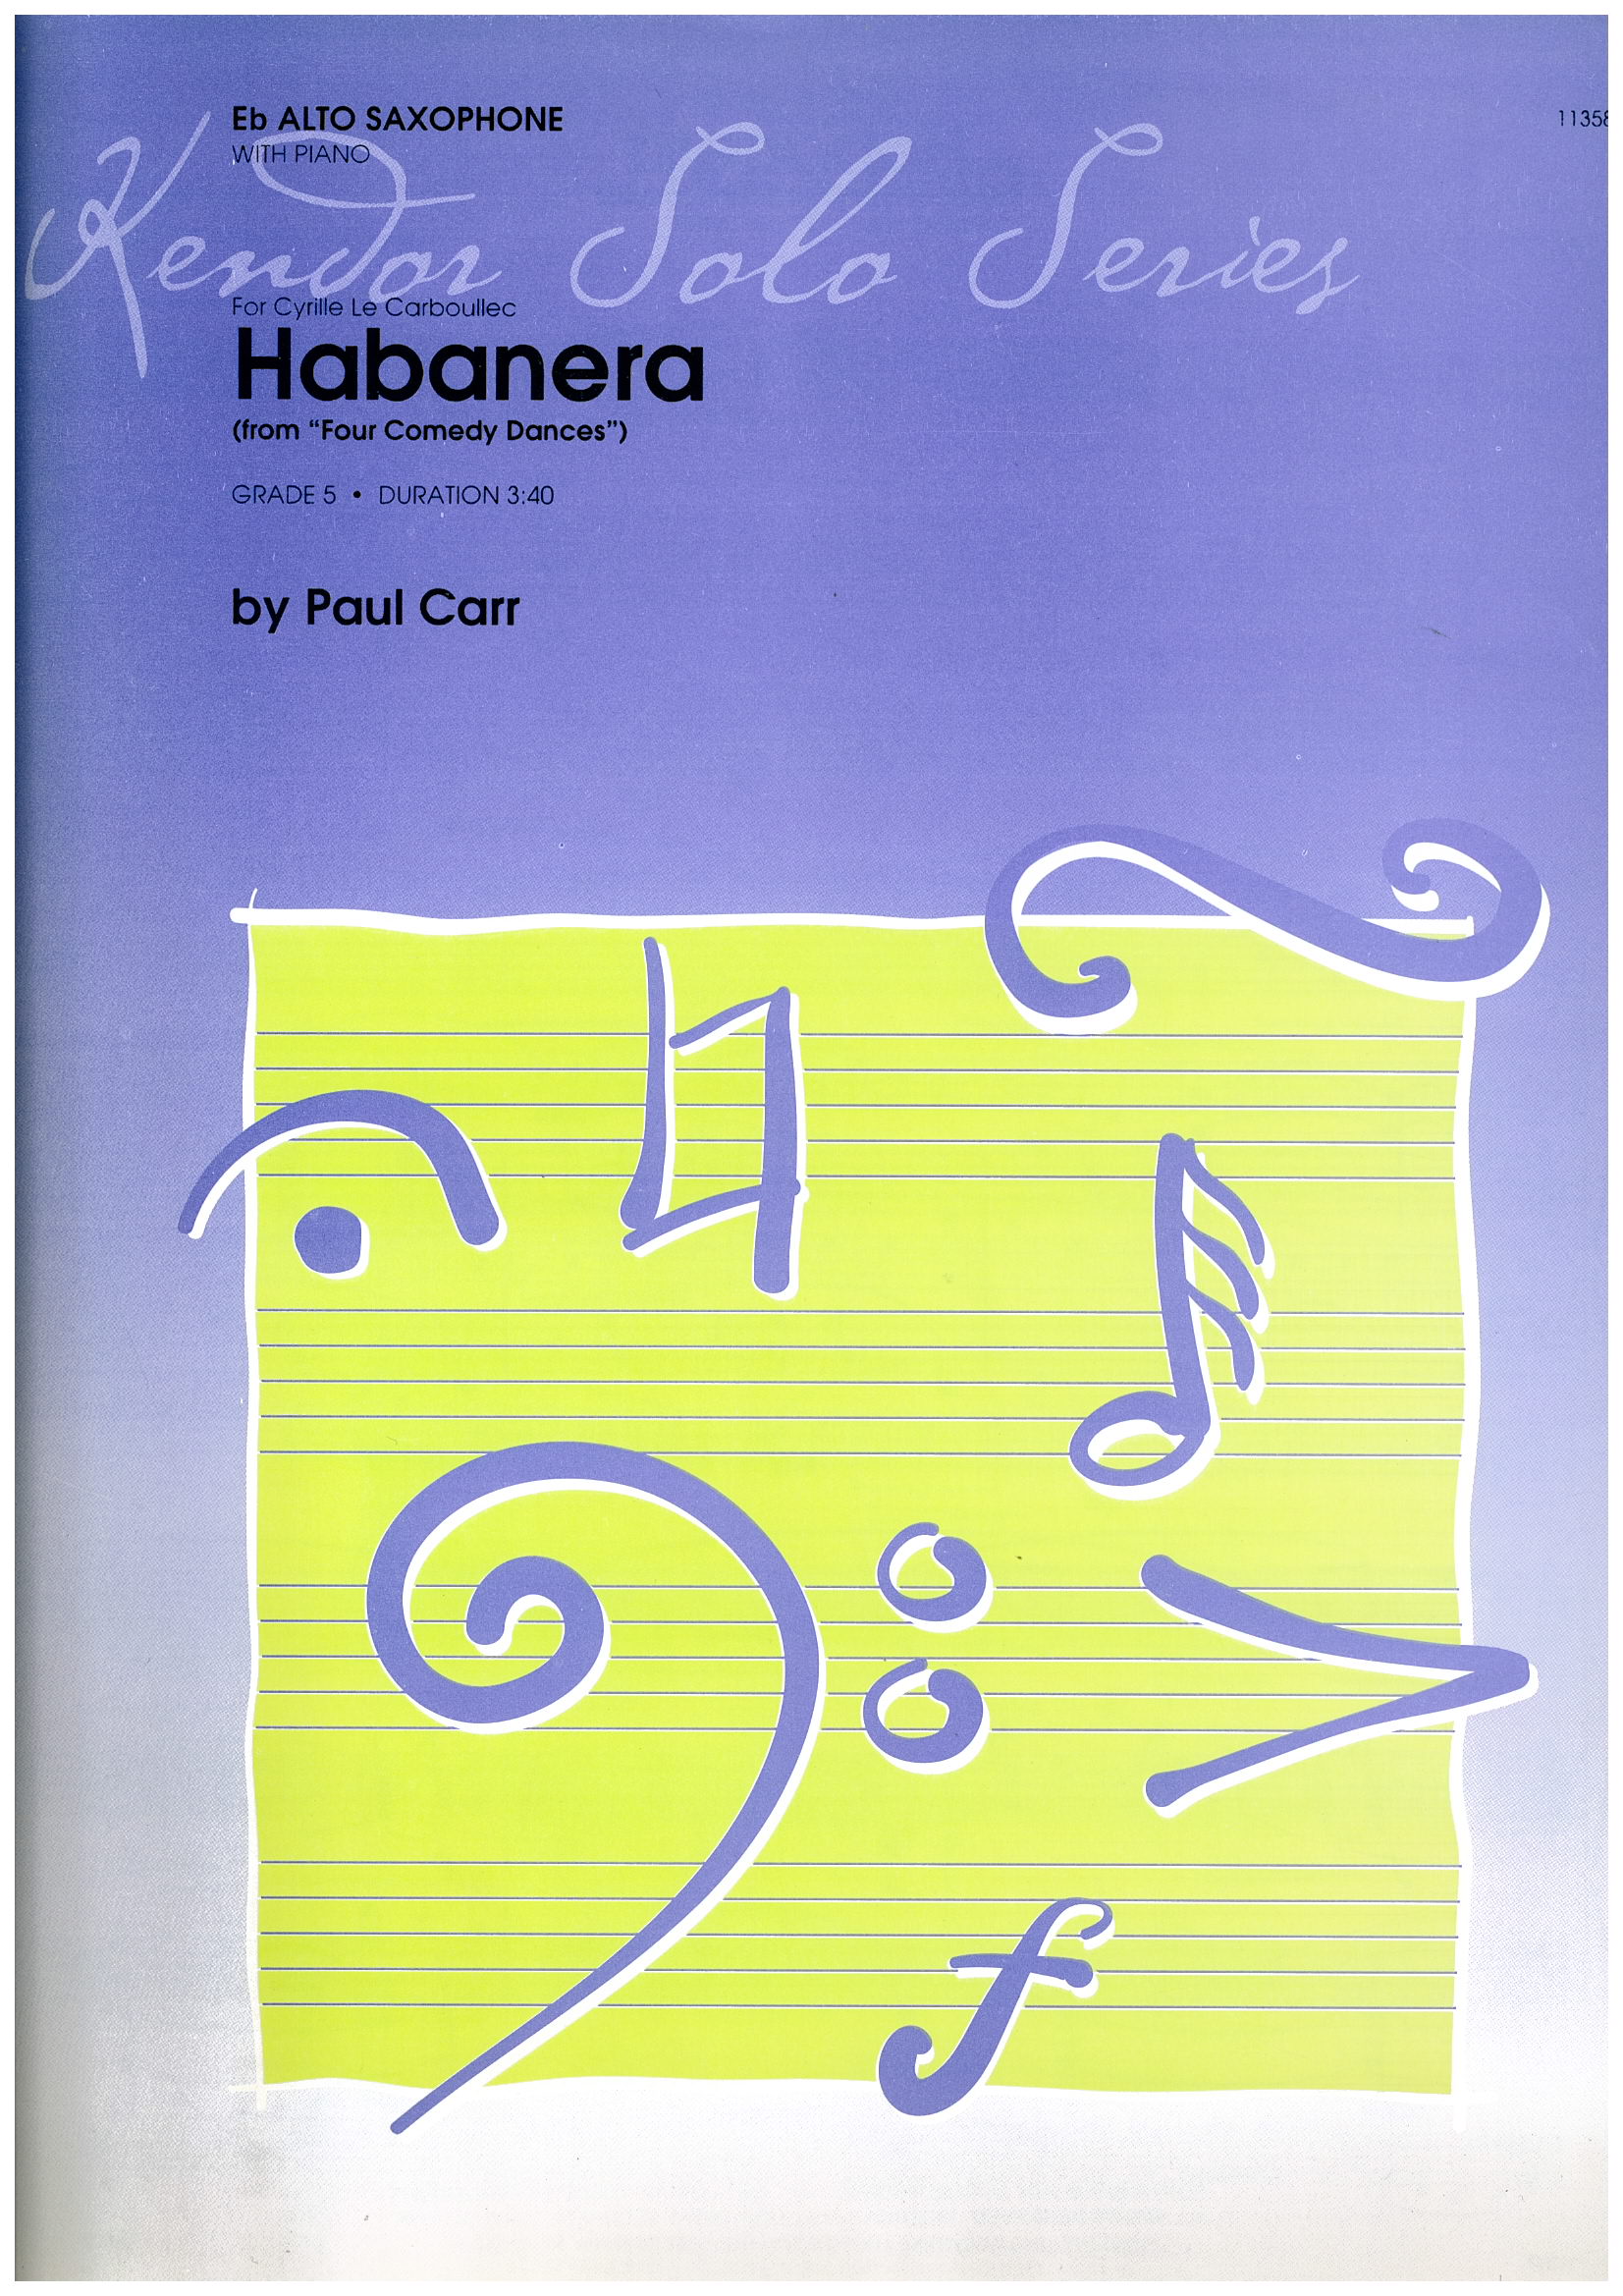 Habanera for E flat Alto Saxophone